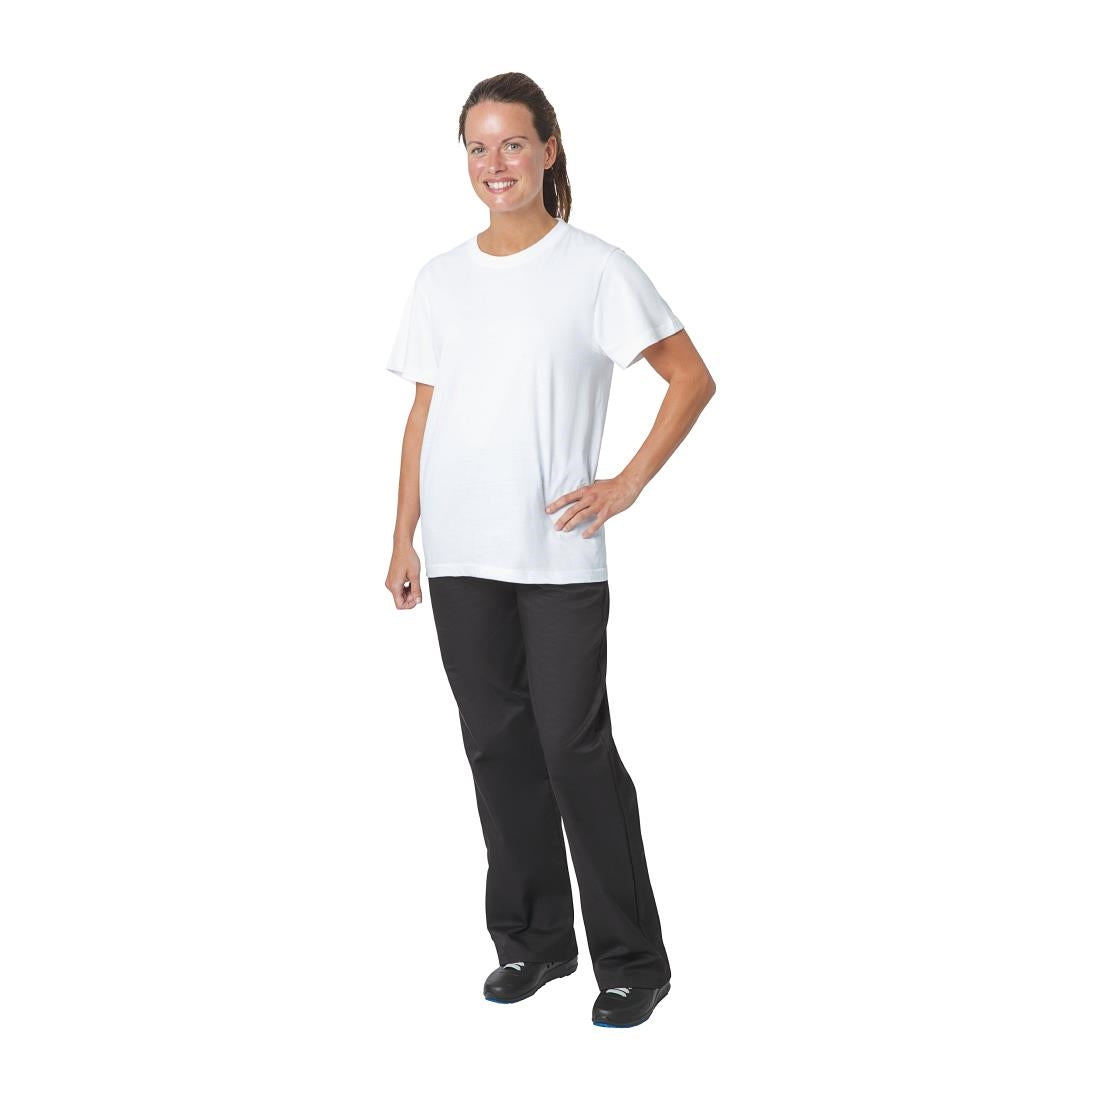 A103-4XL Unisex Chef T-Shirt White 4XL JD Catering Equipment Solutions Ltd